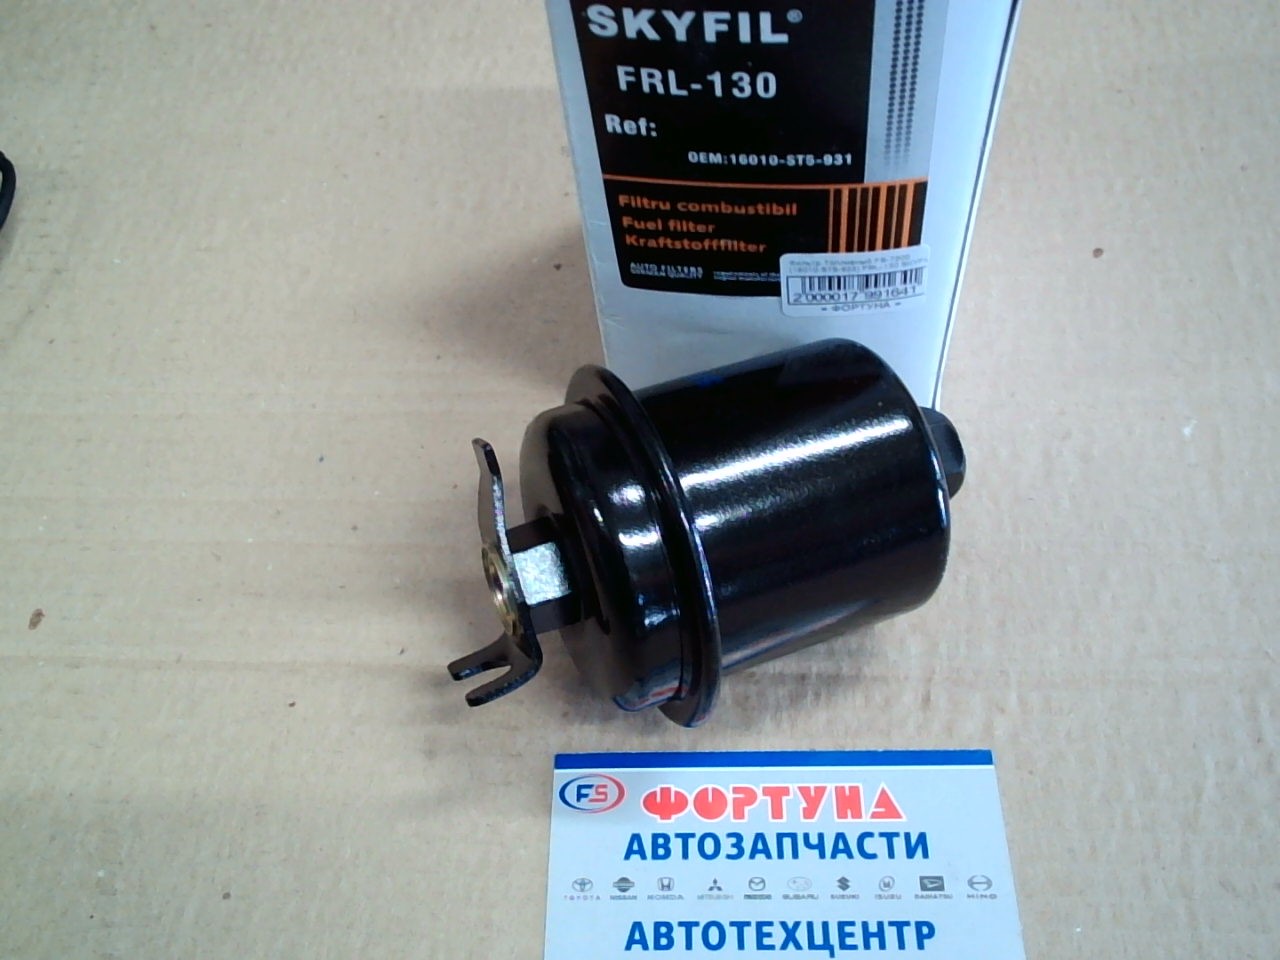 Фильтр Топливный FS-7200 (16010-ST5-933) FRL-130 SKYFIL на  